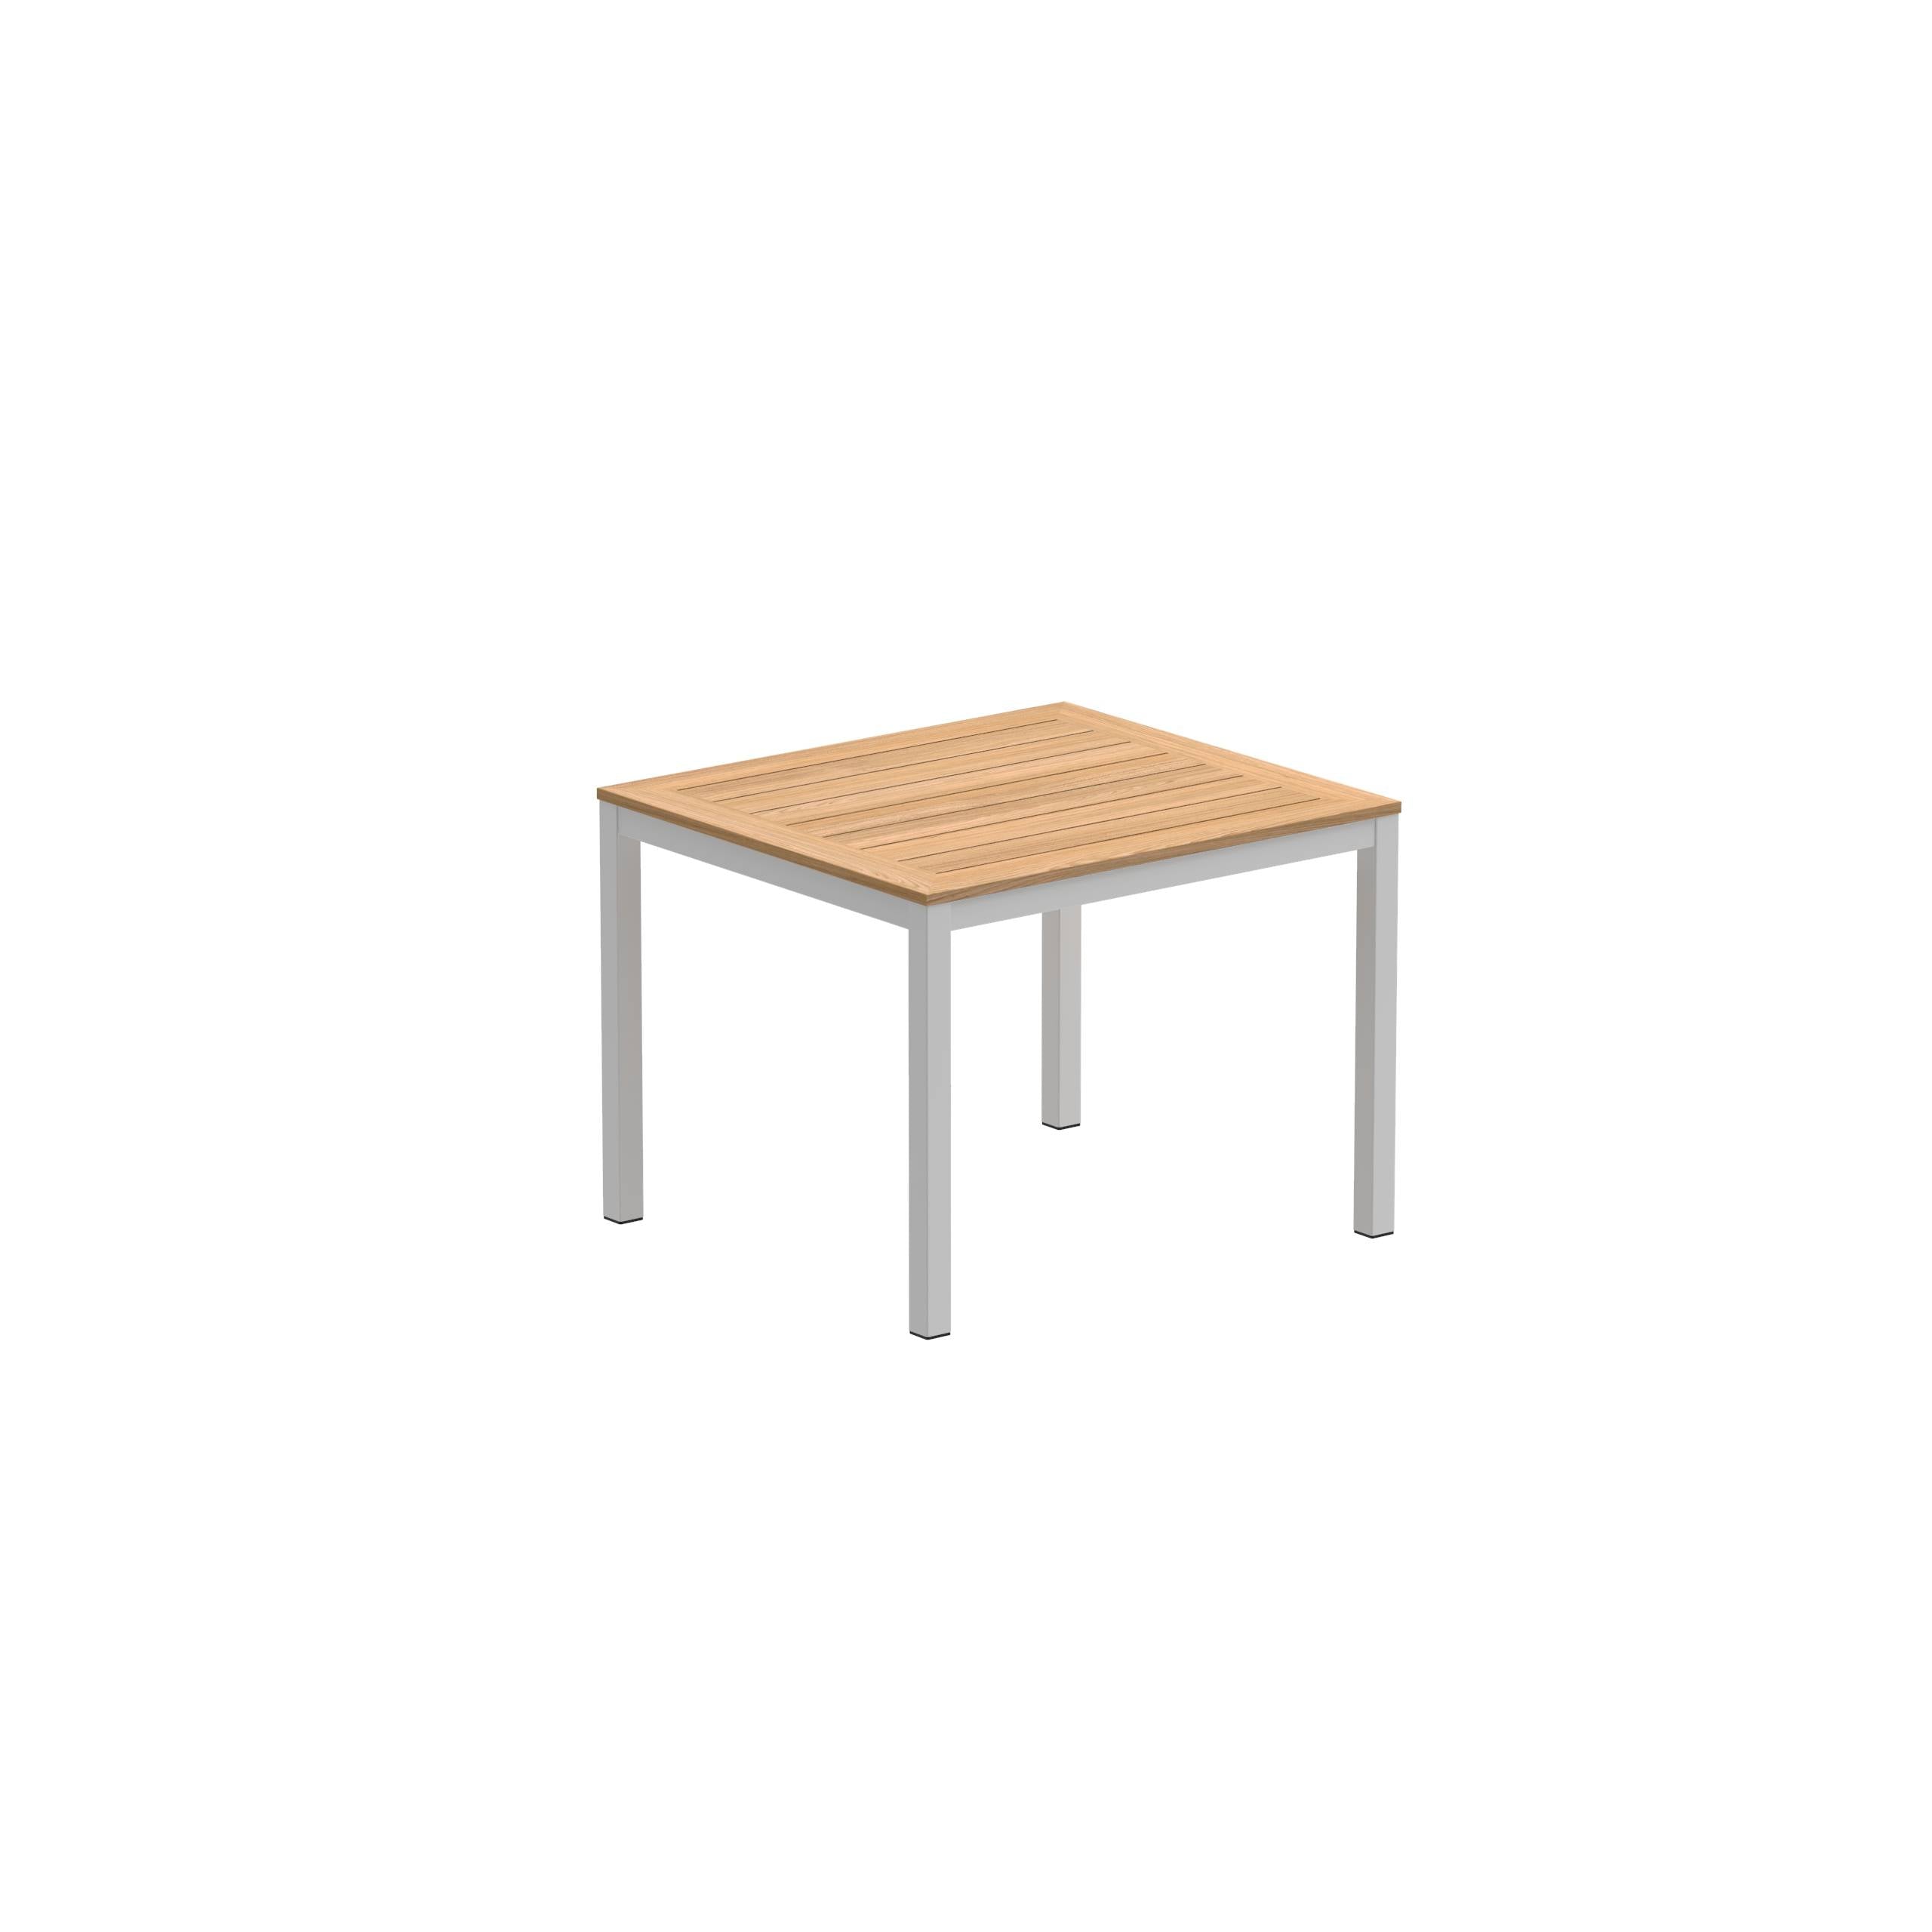 Taboela Table 100x90cm White With Teak Top